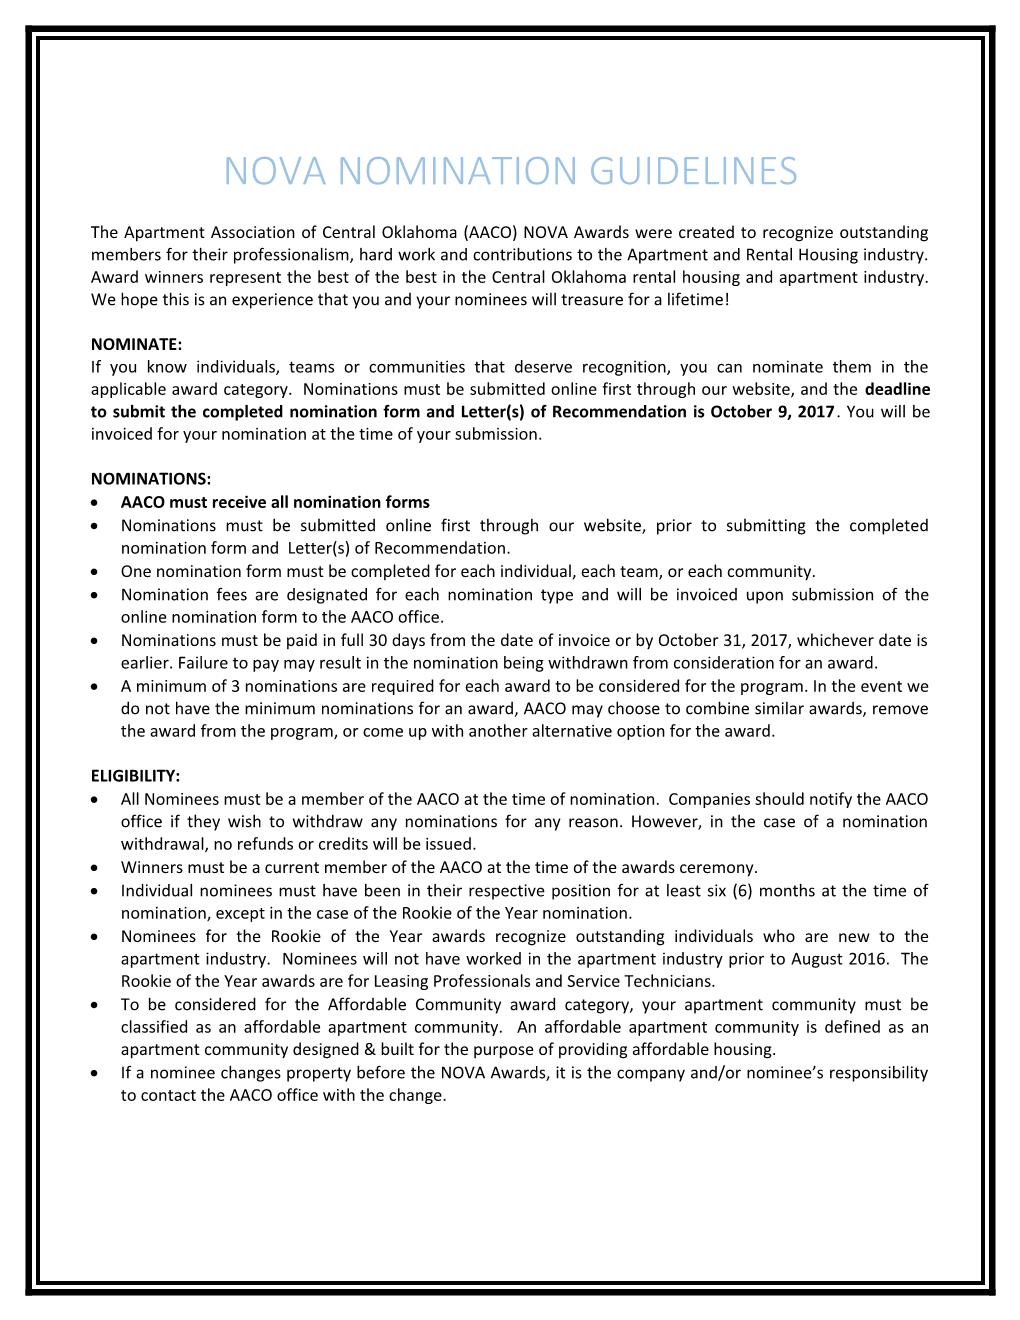 Nova Nomination Guidelines